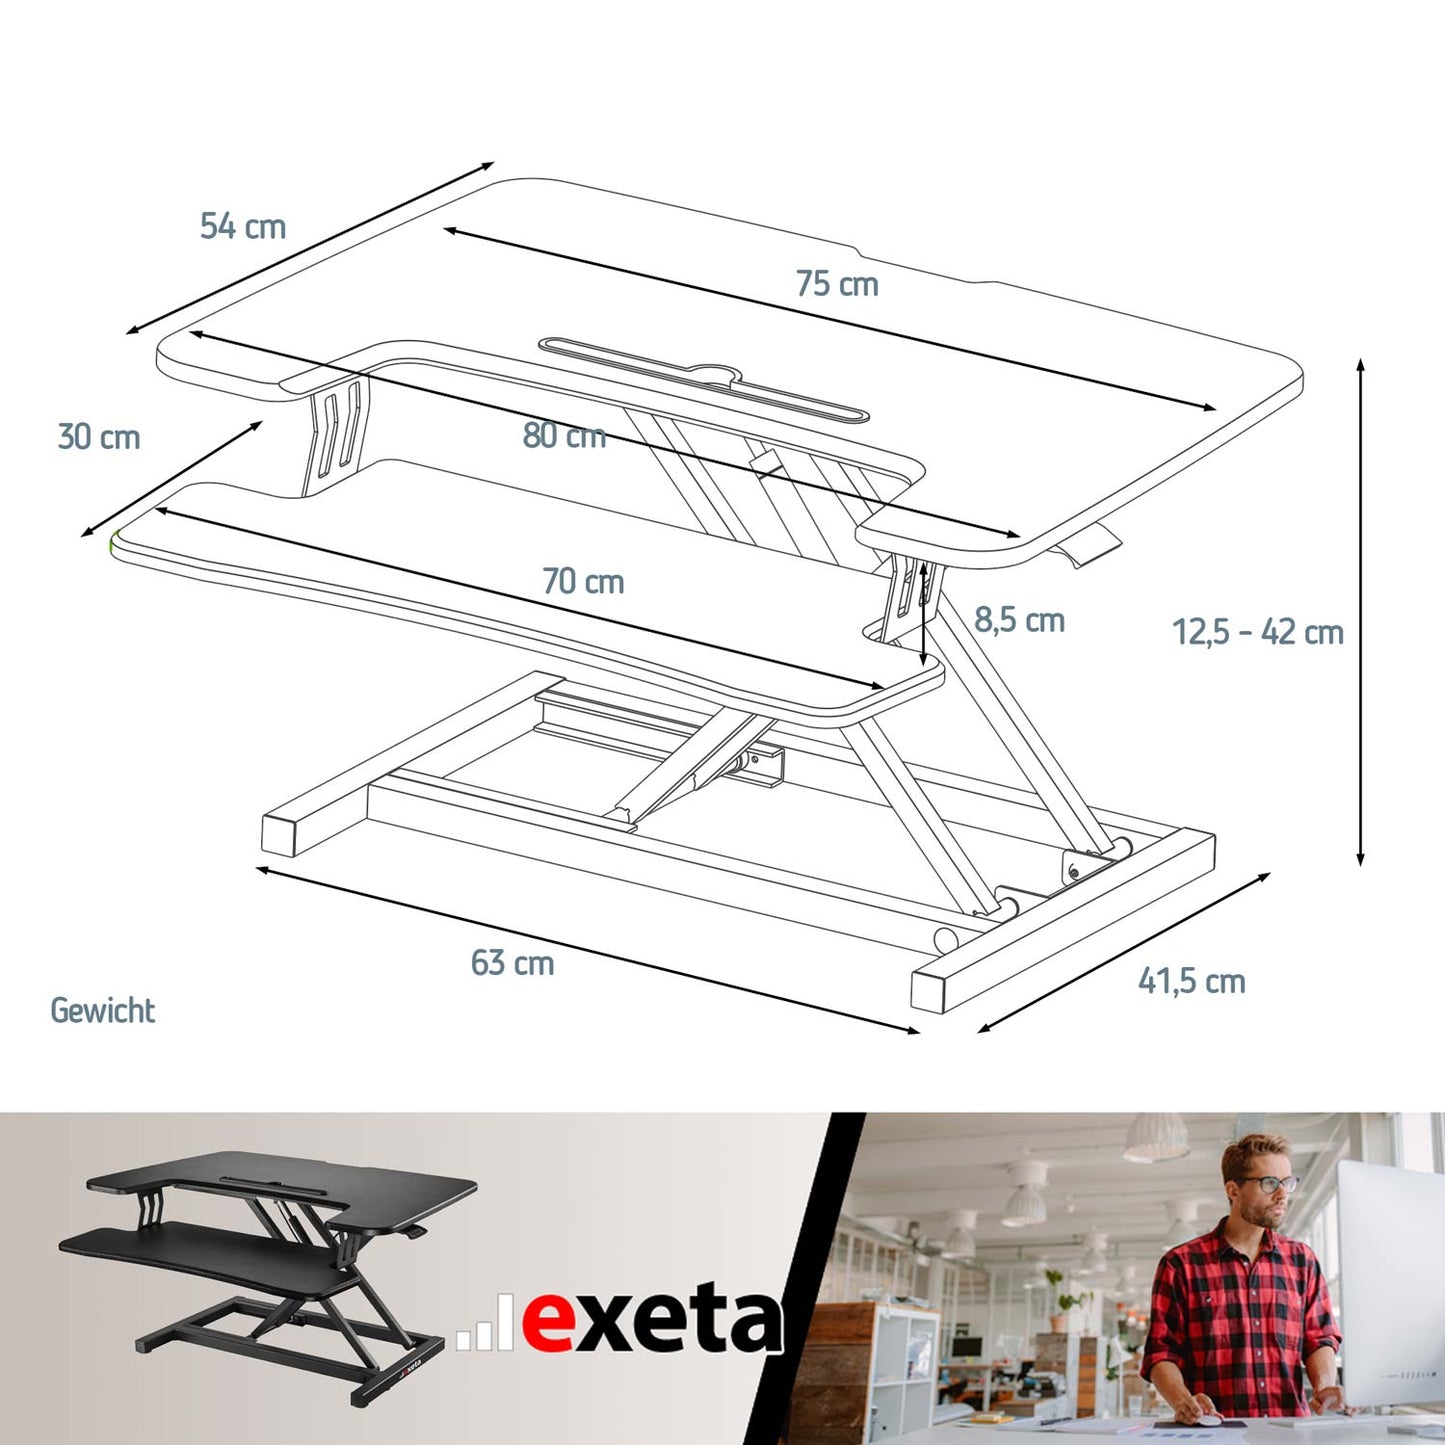 exeta ergoX-S Tischaufsatz manuell höhenverstellbar Bemaßung